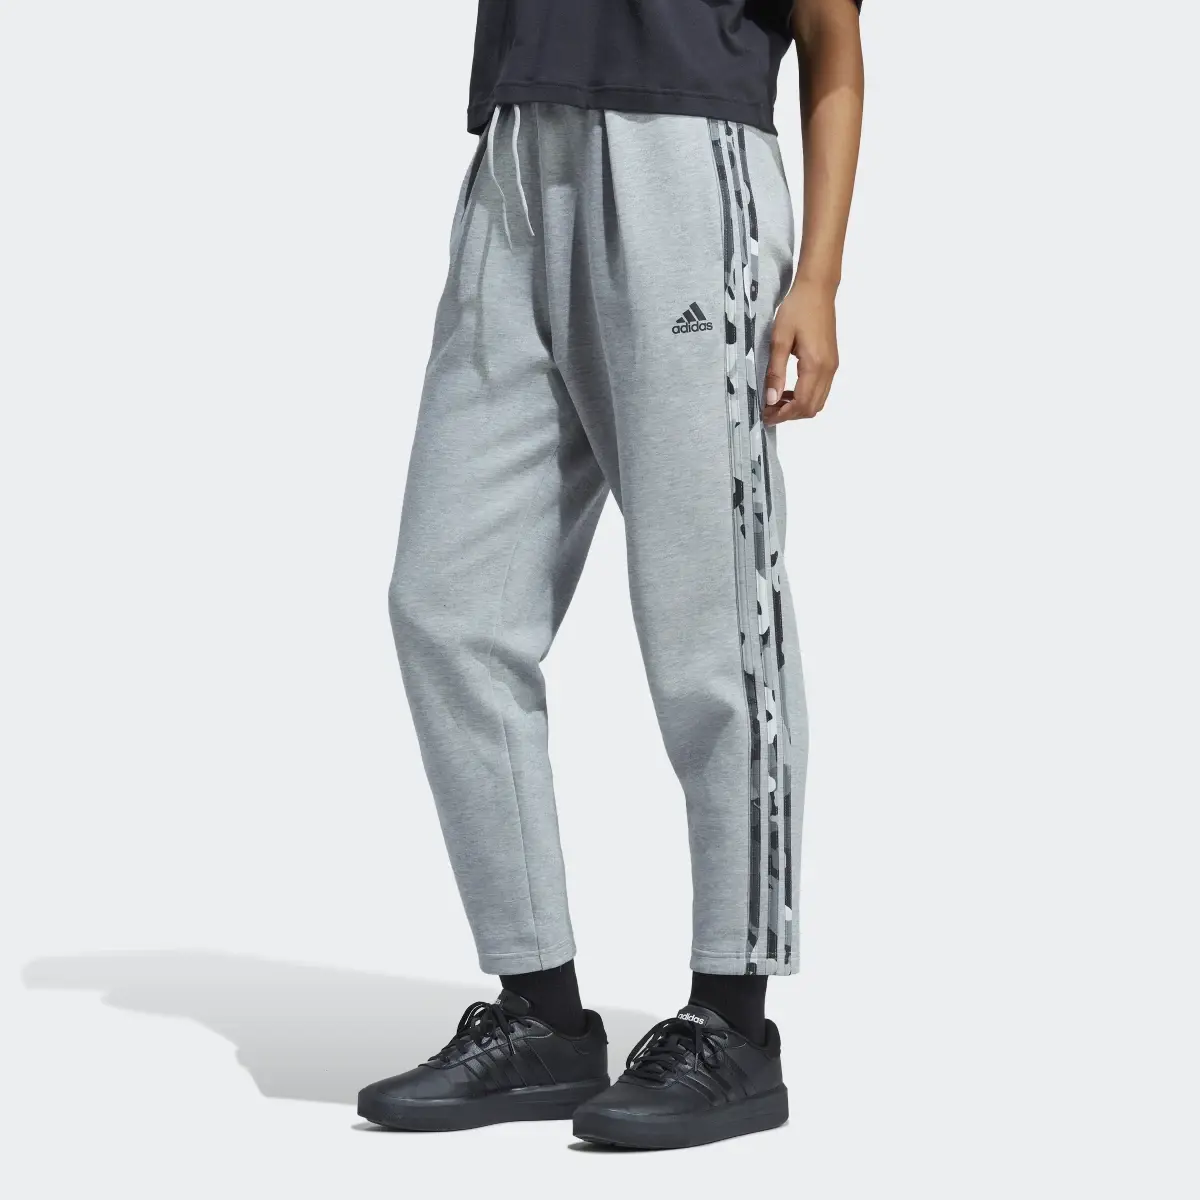 Adidas Graphic Pants. 1